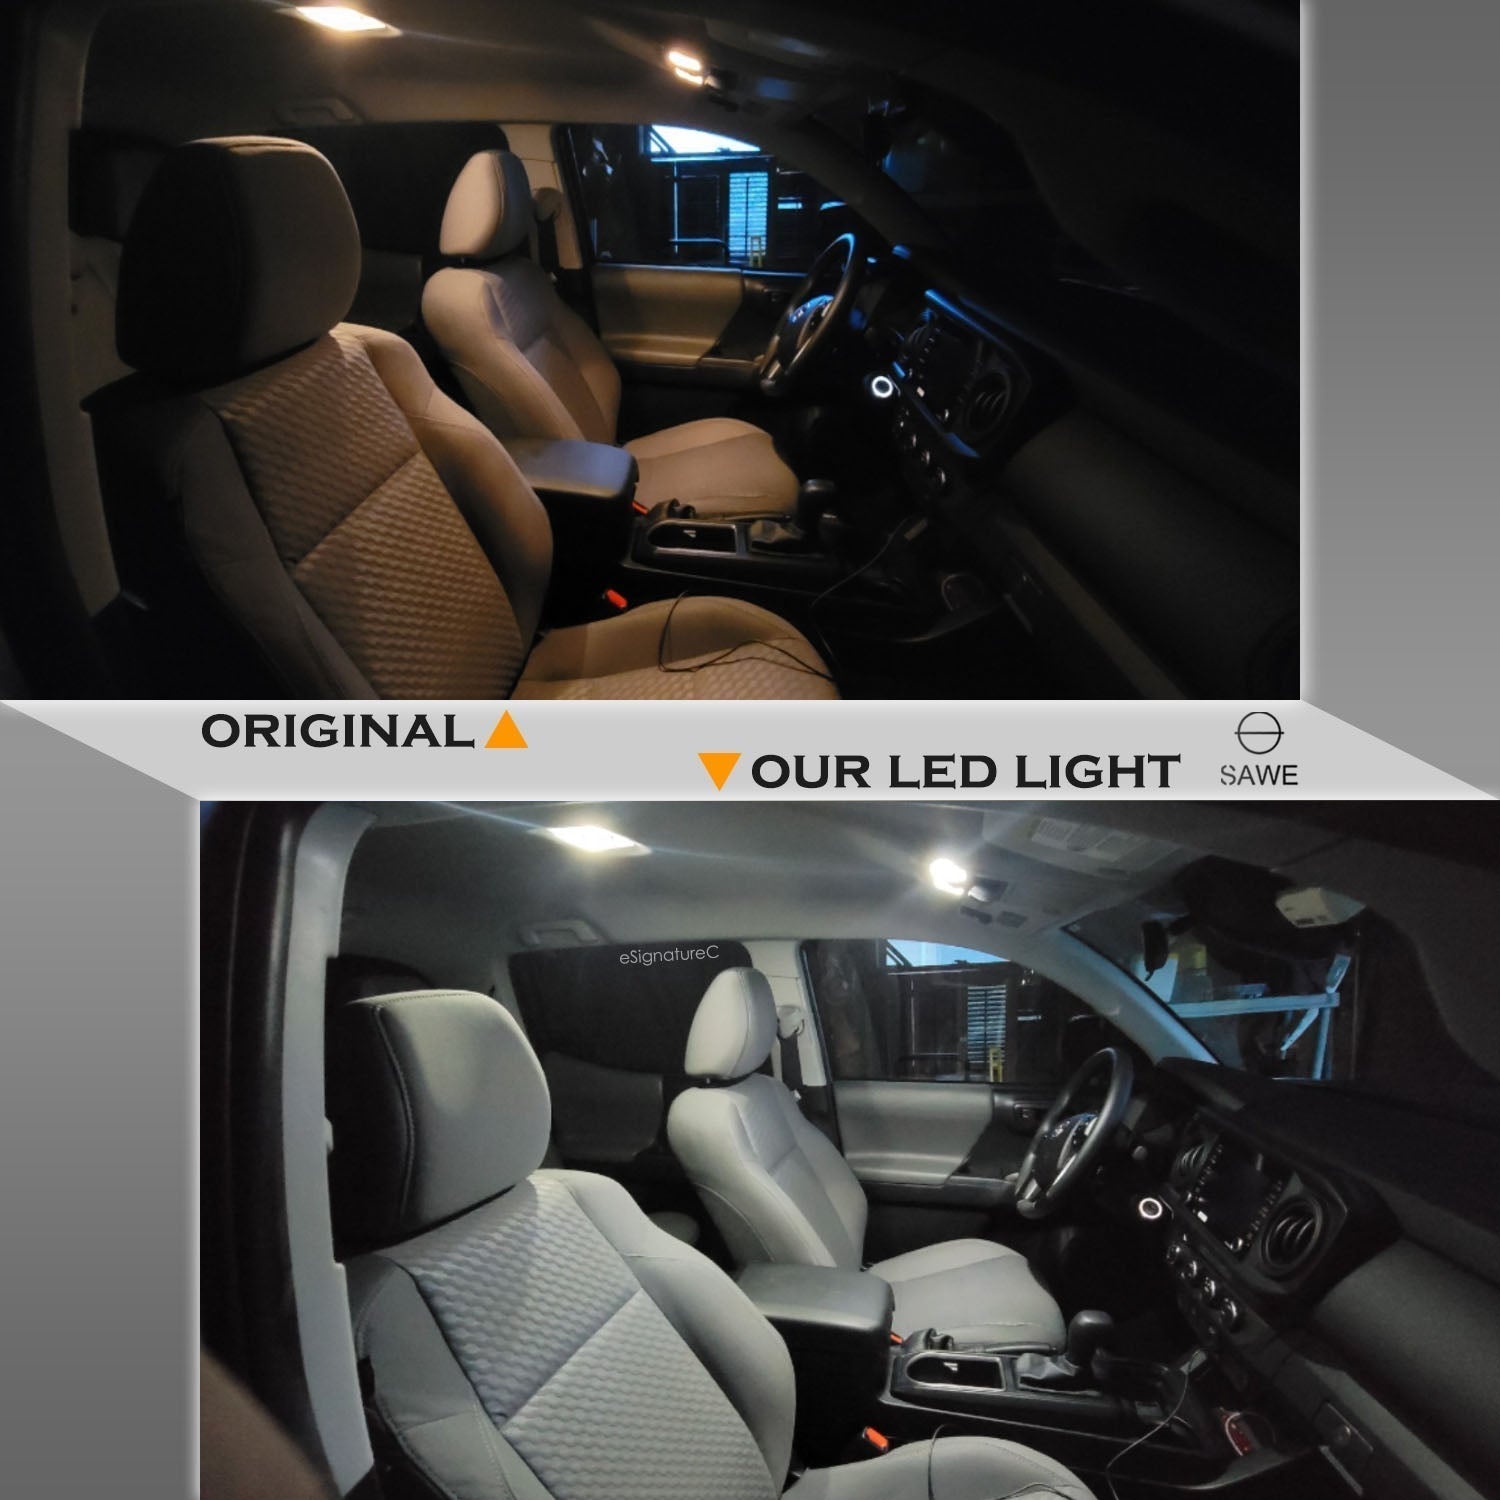 For Chrysler Pacifica Interior LED Lights - Dome & Map Light Bulbs Package Kit for 2004 - 2008 - White